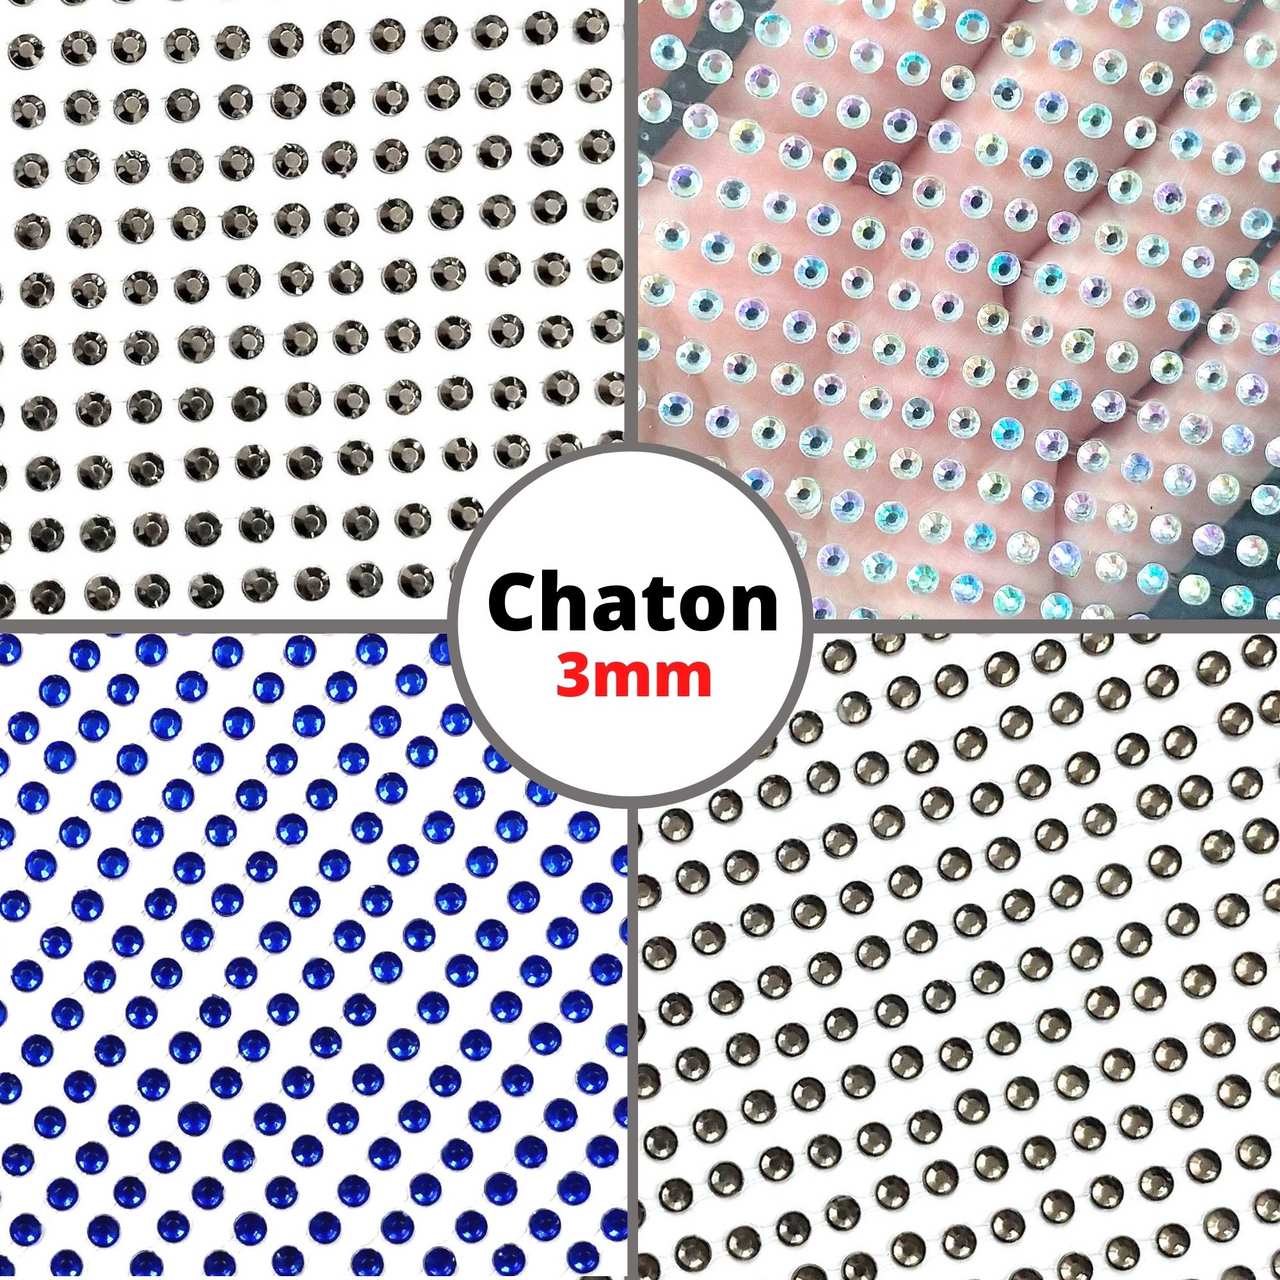 Cartela Adesiva Chaton 3mm - 1 cartela